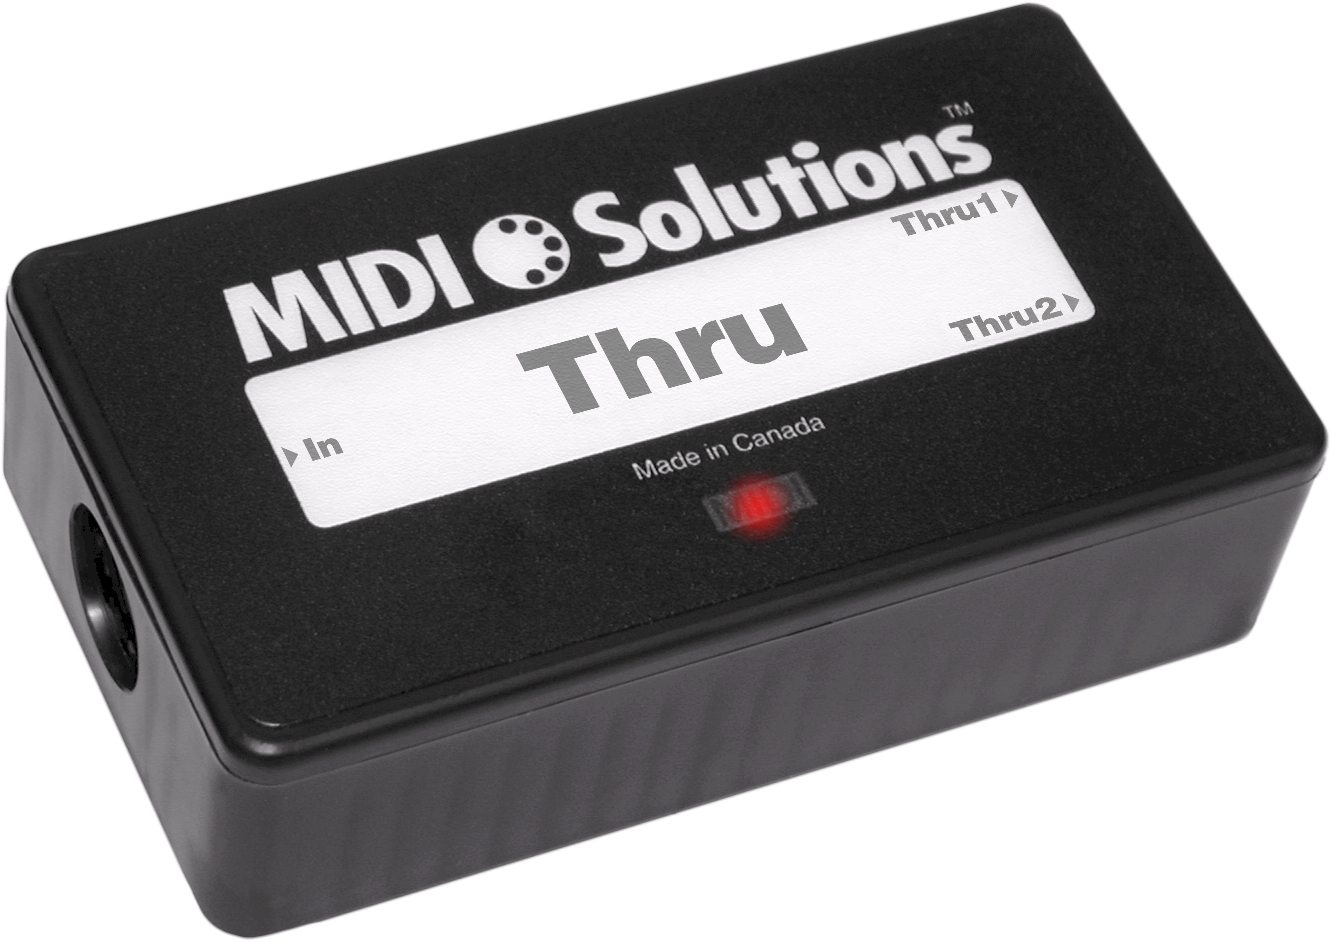 MIDI Solutions MIDI Solutions 2-Out MIDI Thru Box